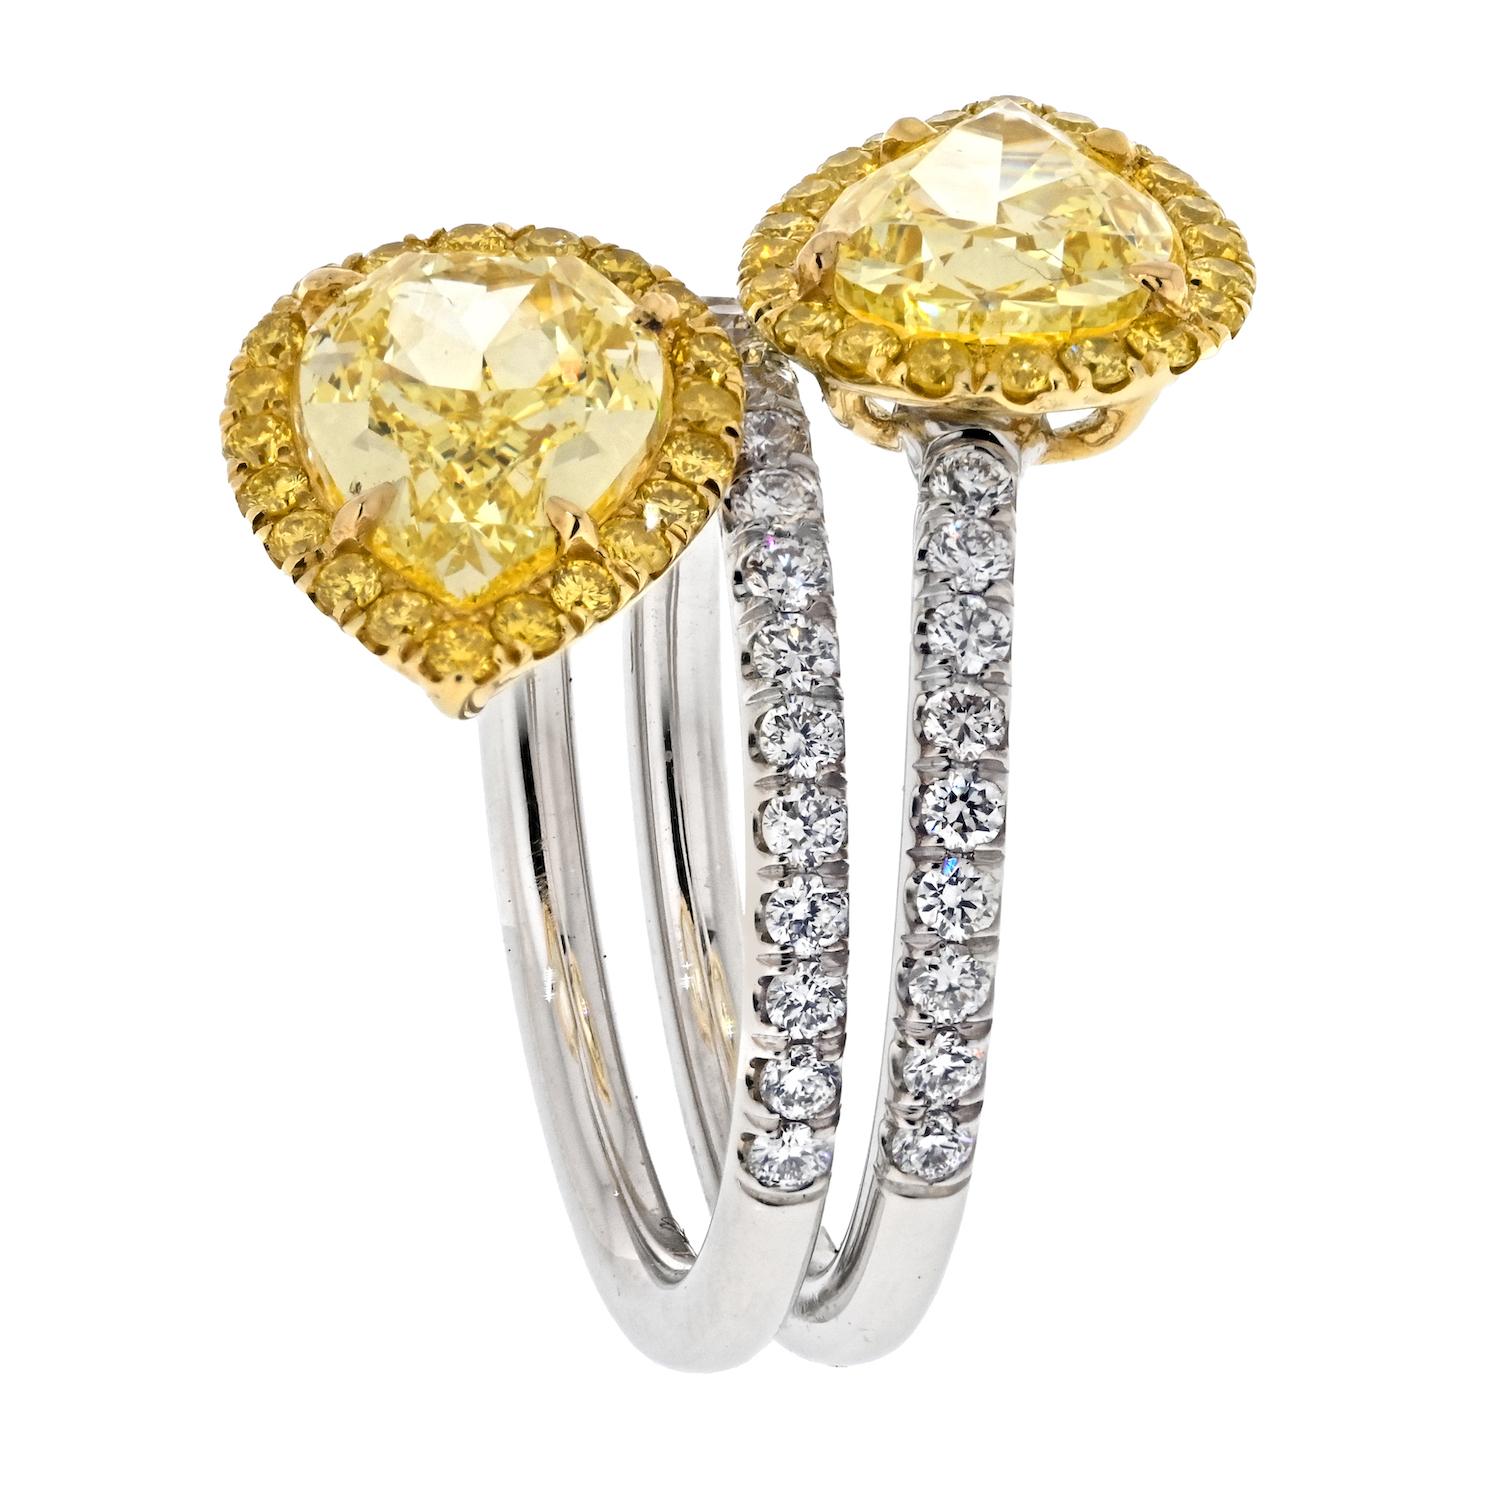 Women's 4.01cttw Fancy Yellow Intense Two Stone Pear Cut Diamond Ring GIA Certified